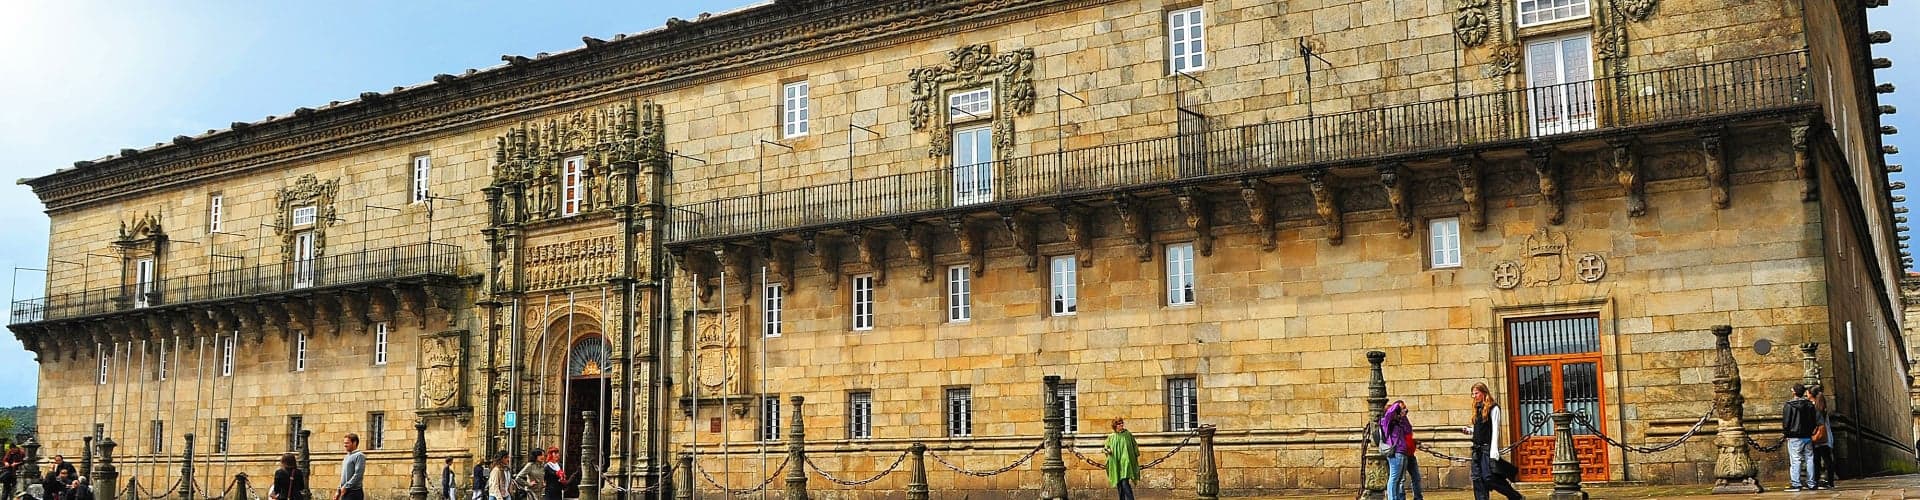 Essential Free Tour Santiago de Compostela Banner